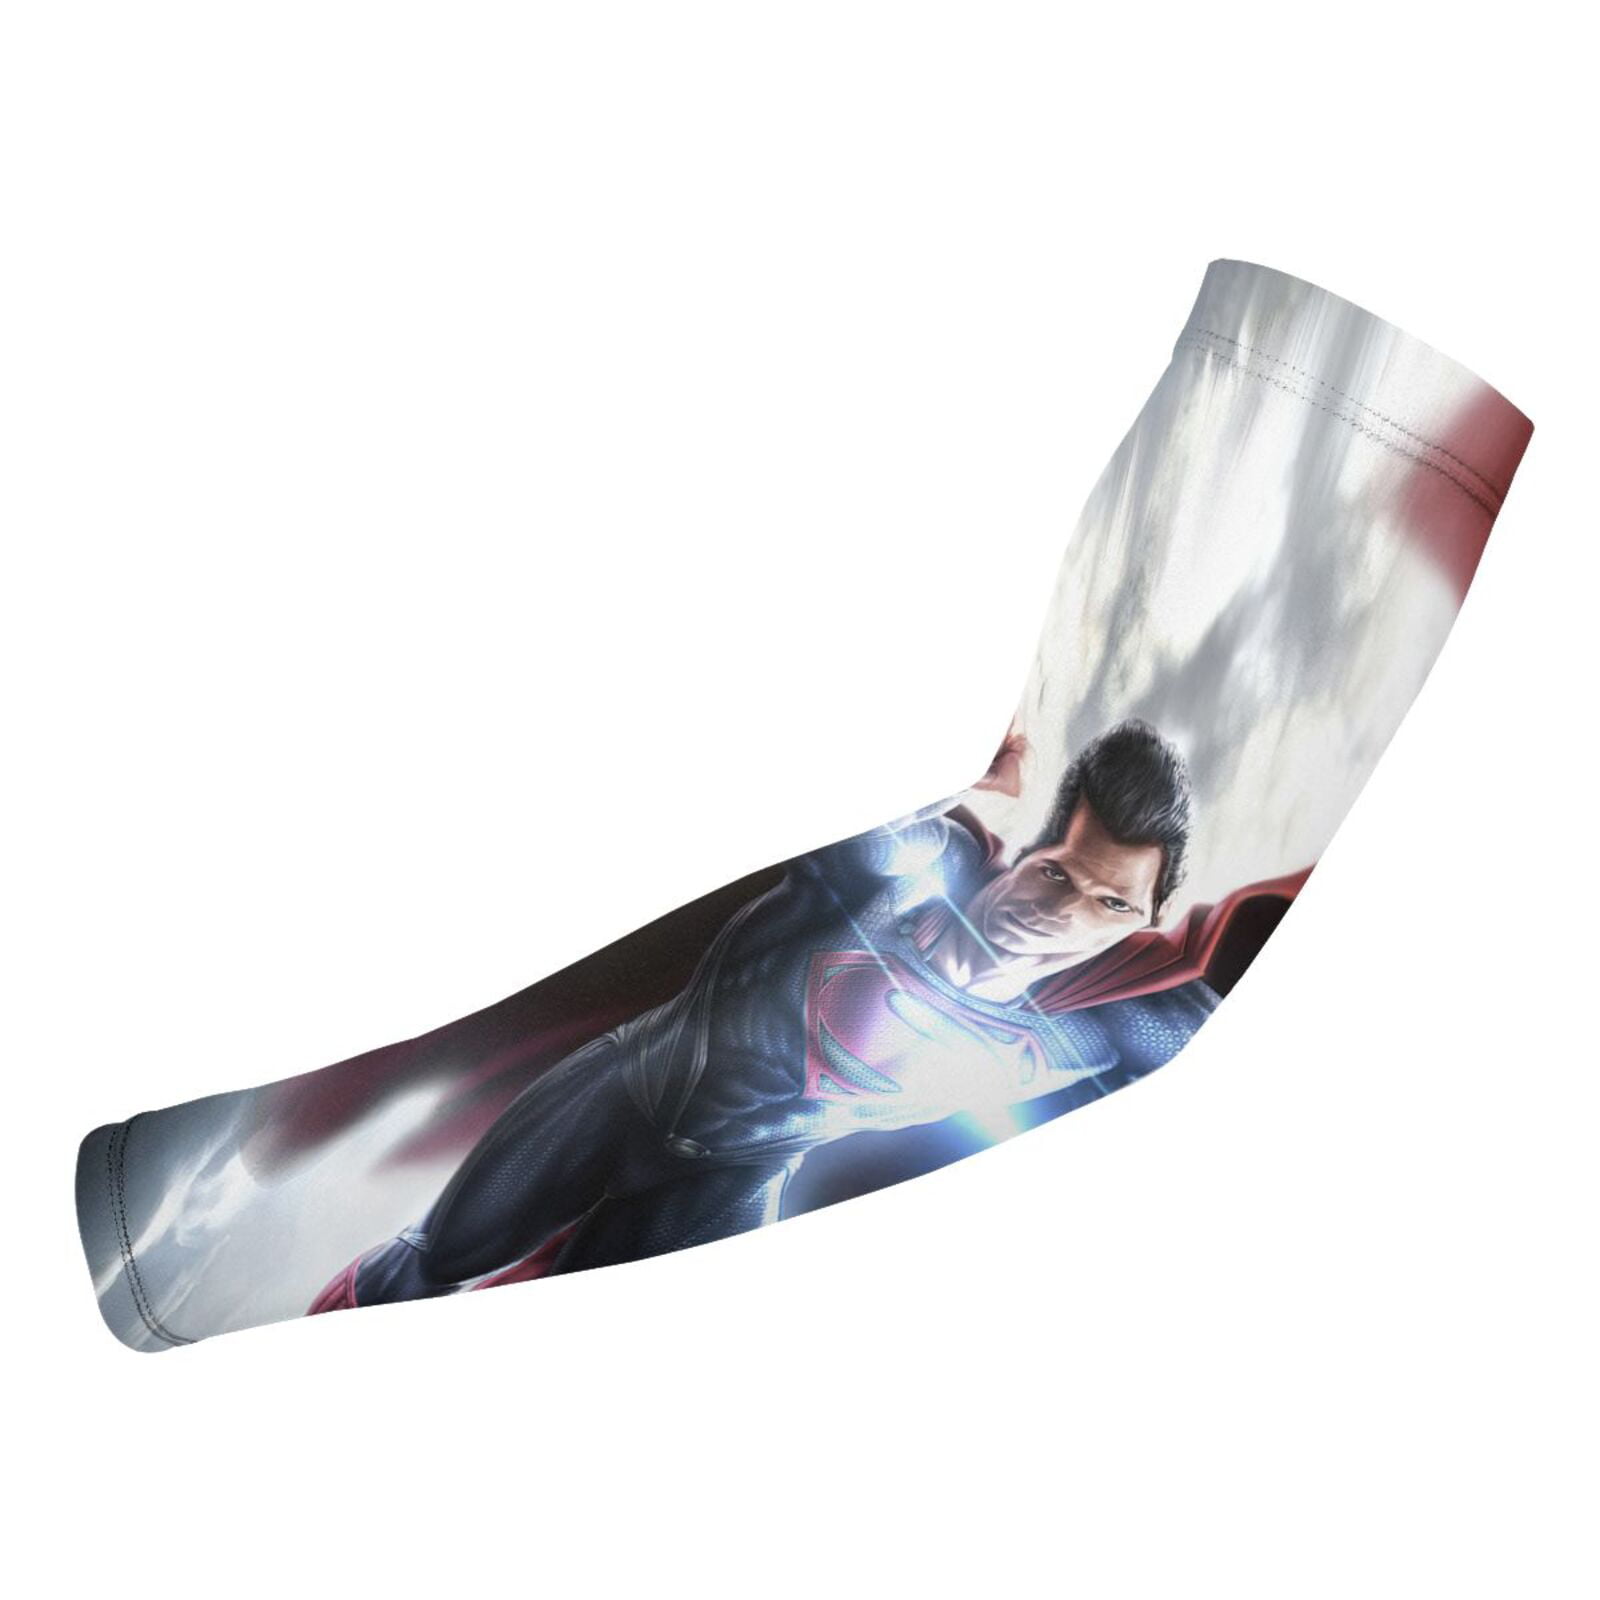 Performa Compression Superman Calf Sleeves Helps Shin Splints and Circulation 